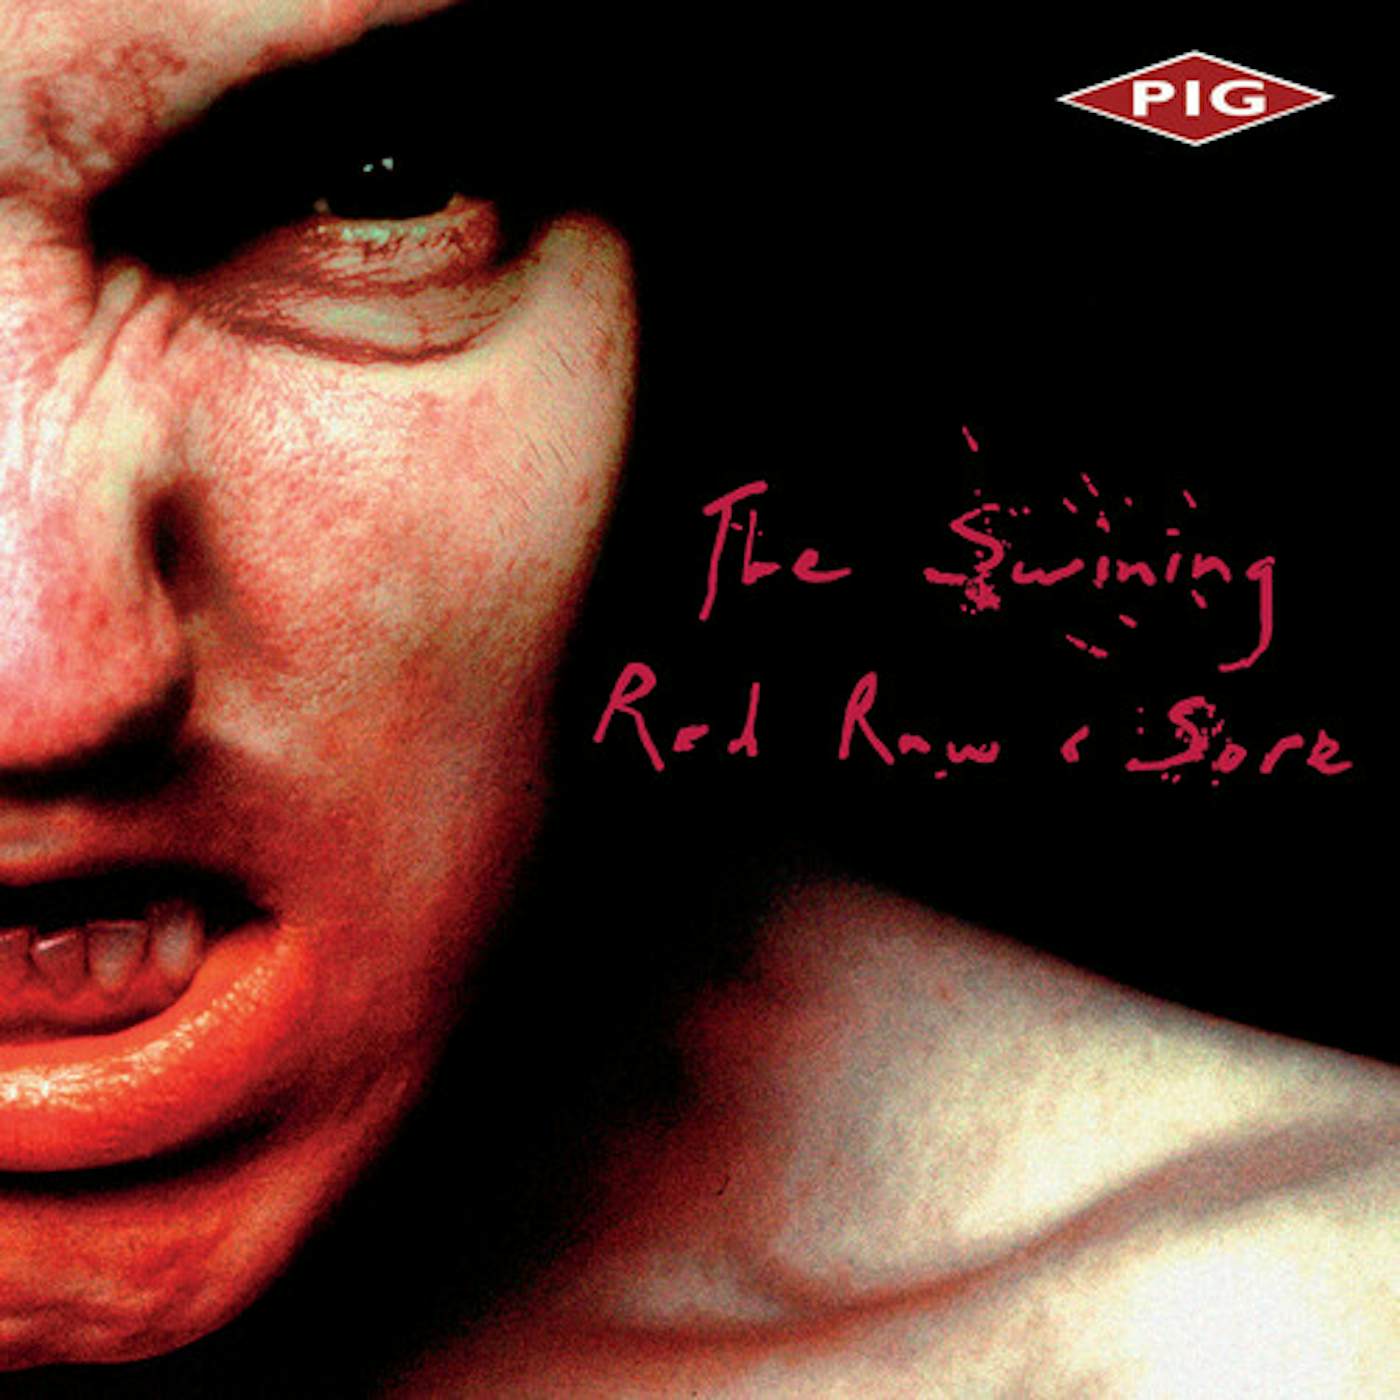 PIG SWINING / RED RAW & SORE CD